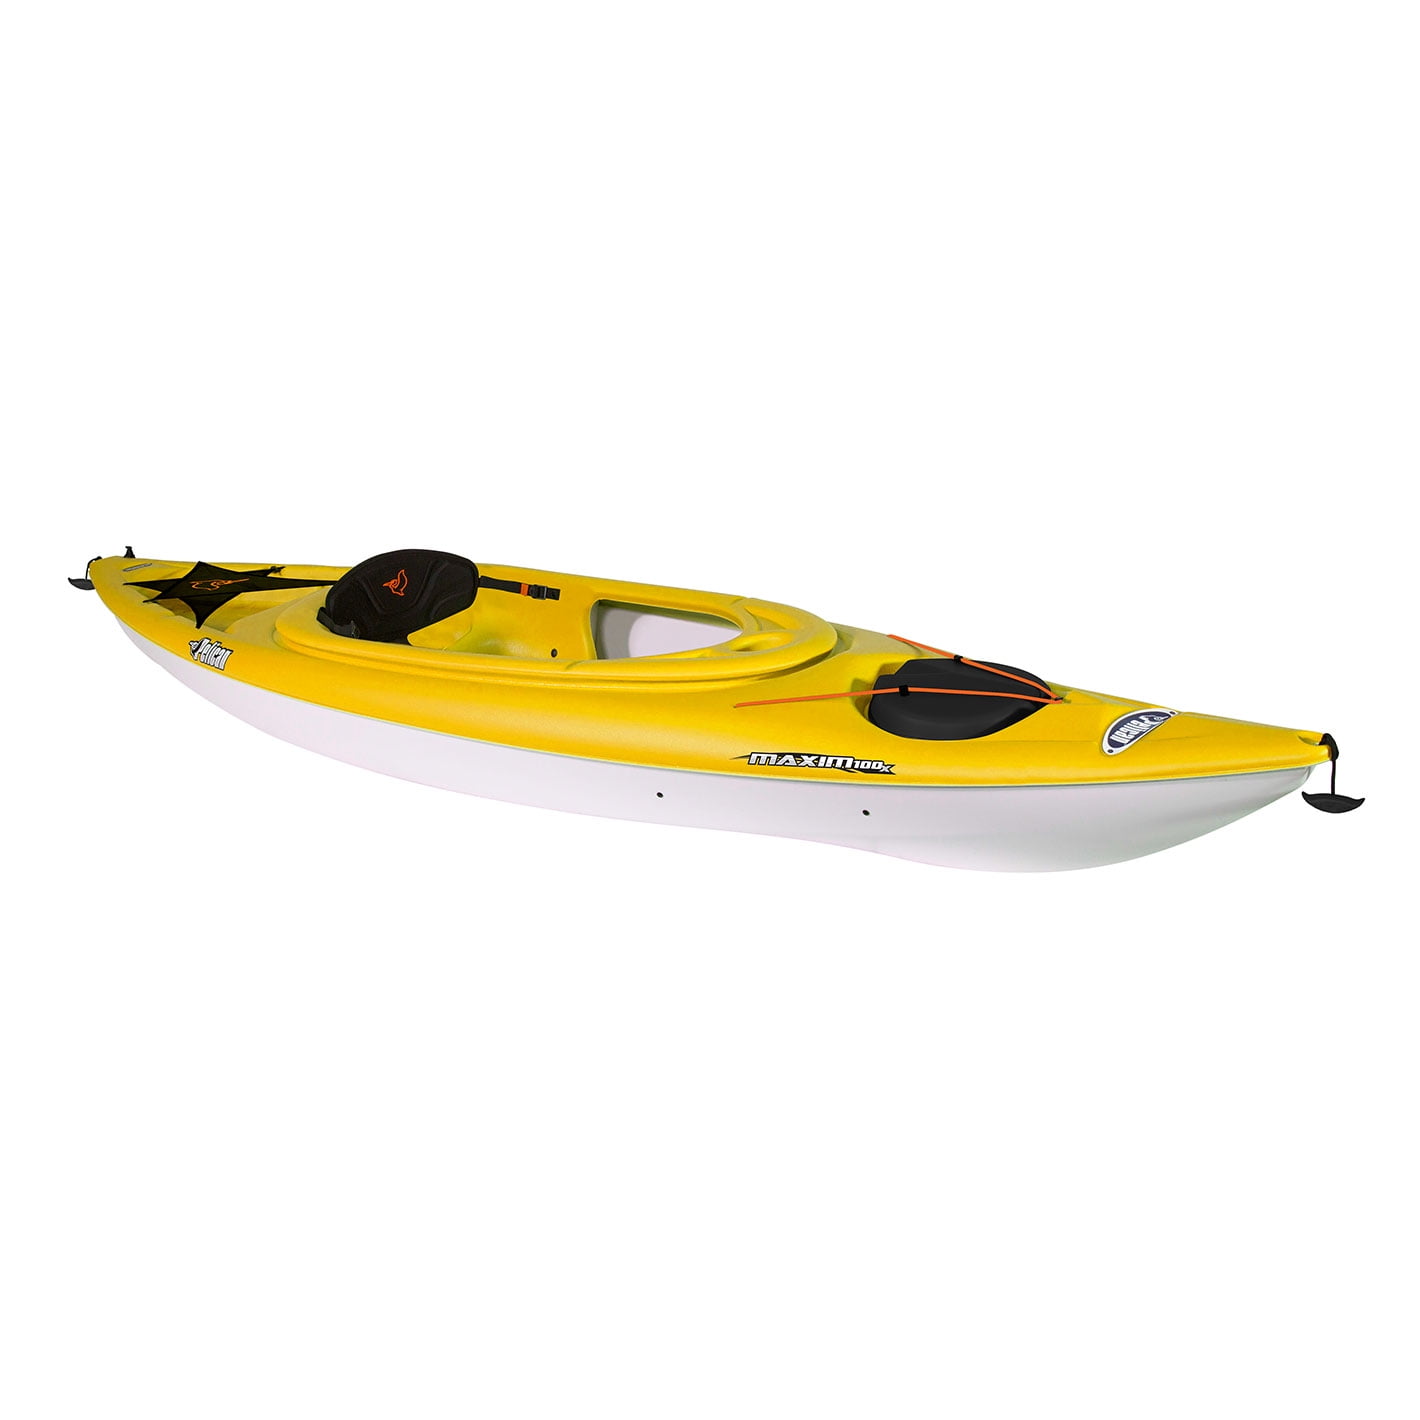 Pelican - Maxim 100x - Recreational Sit-In Kayak - 10 ft - Yellow